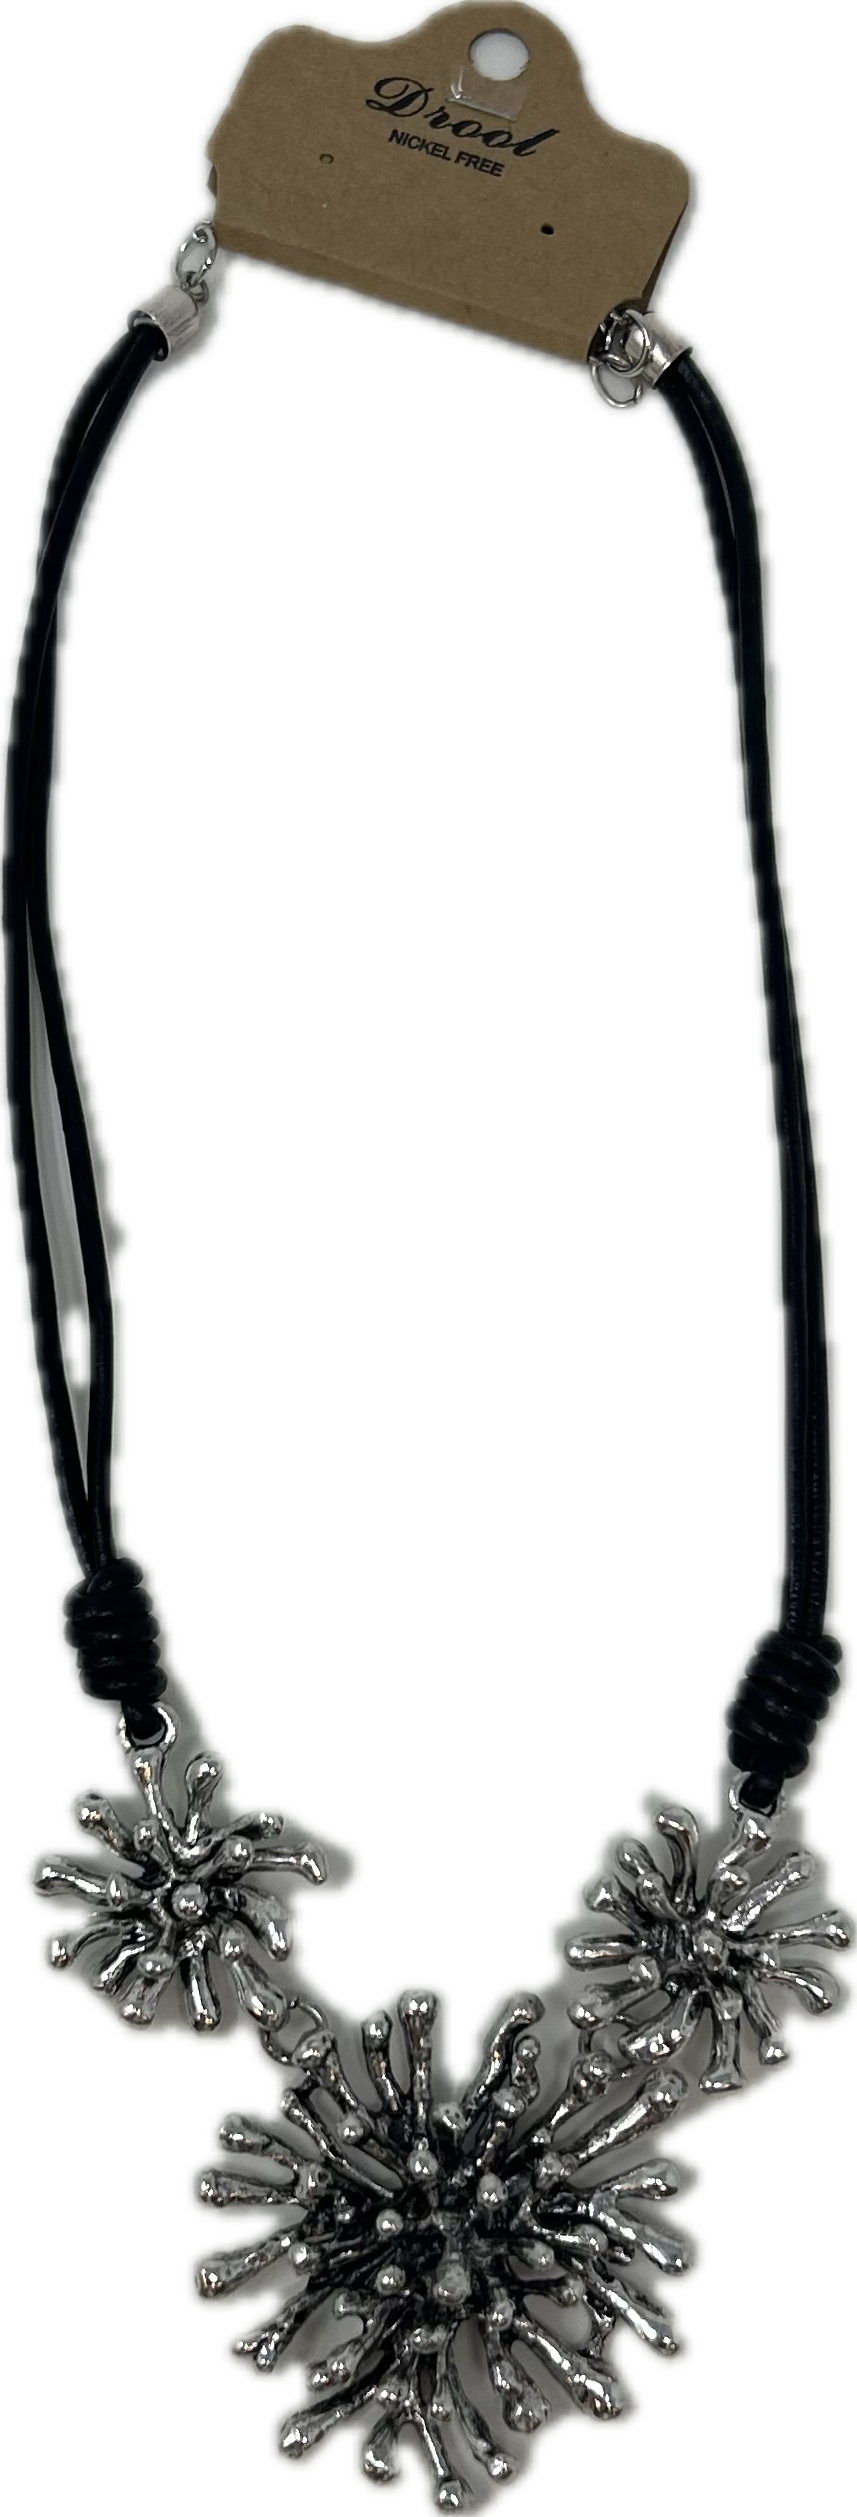 Black Corded Necklace w/ 3 Metal Dandelions Pendant